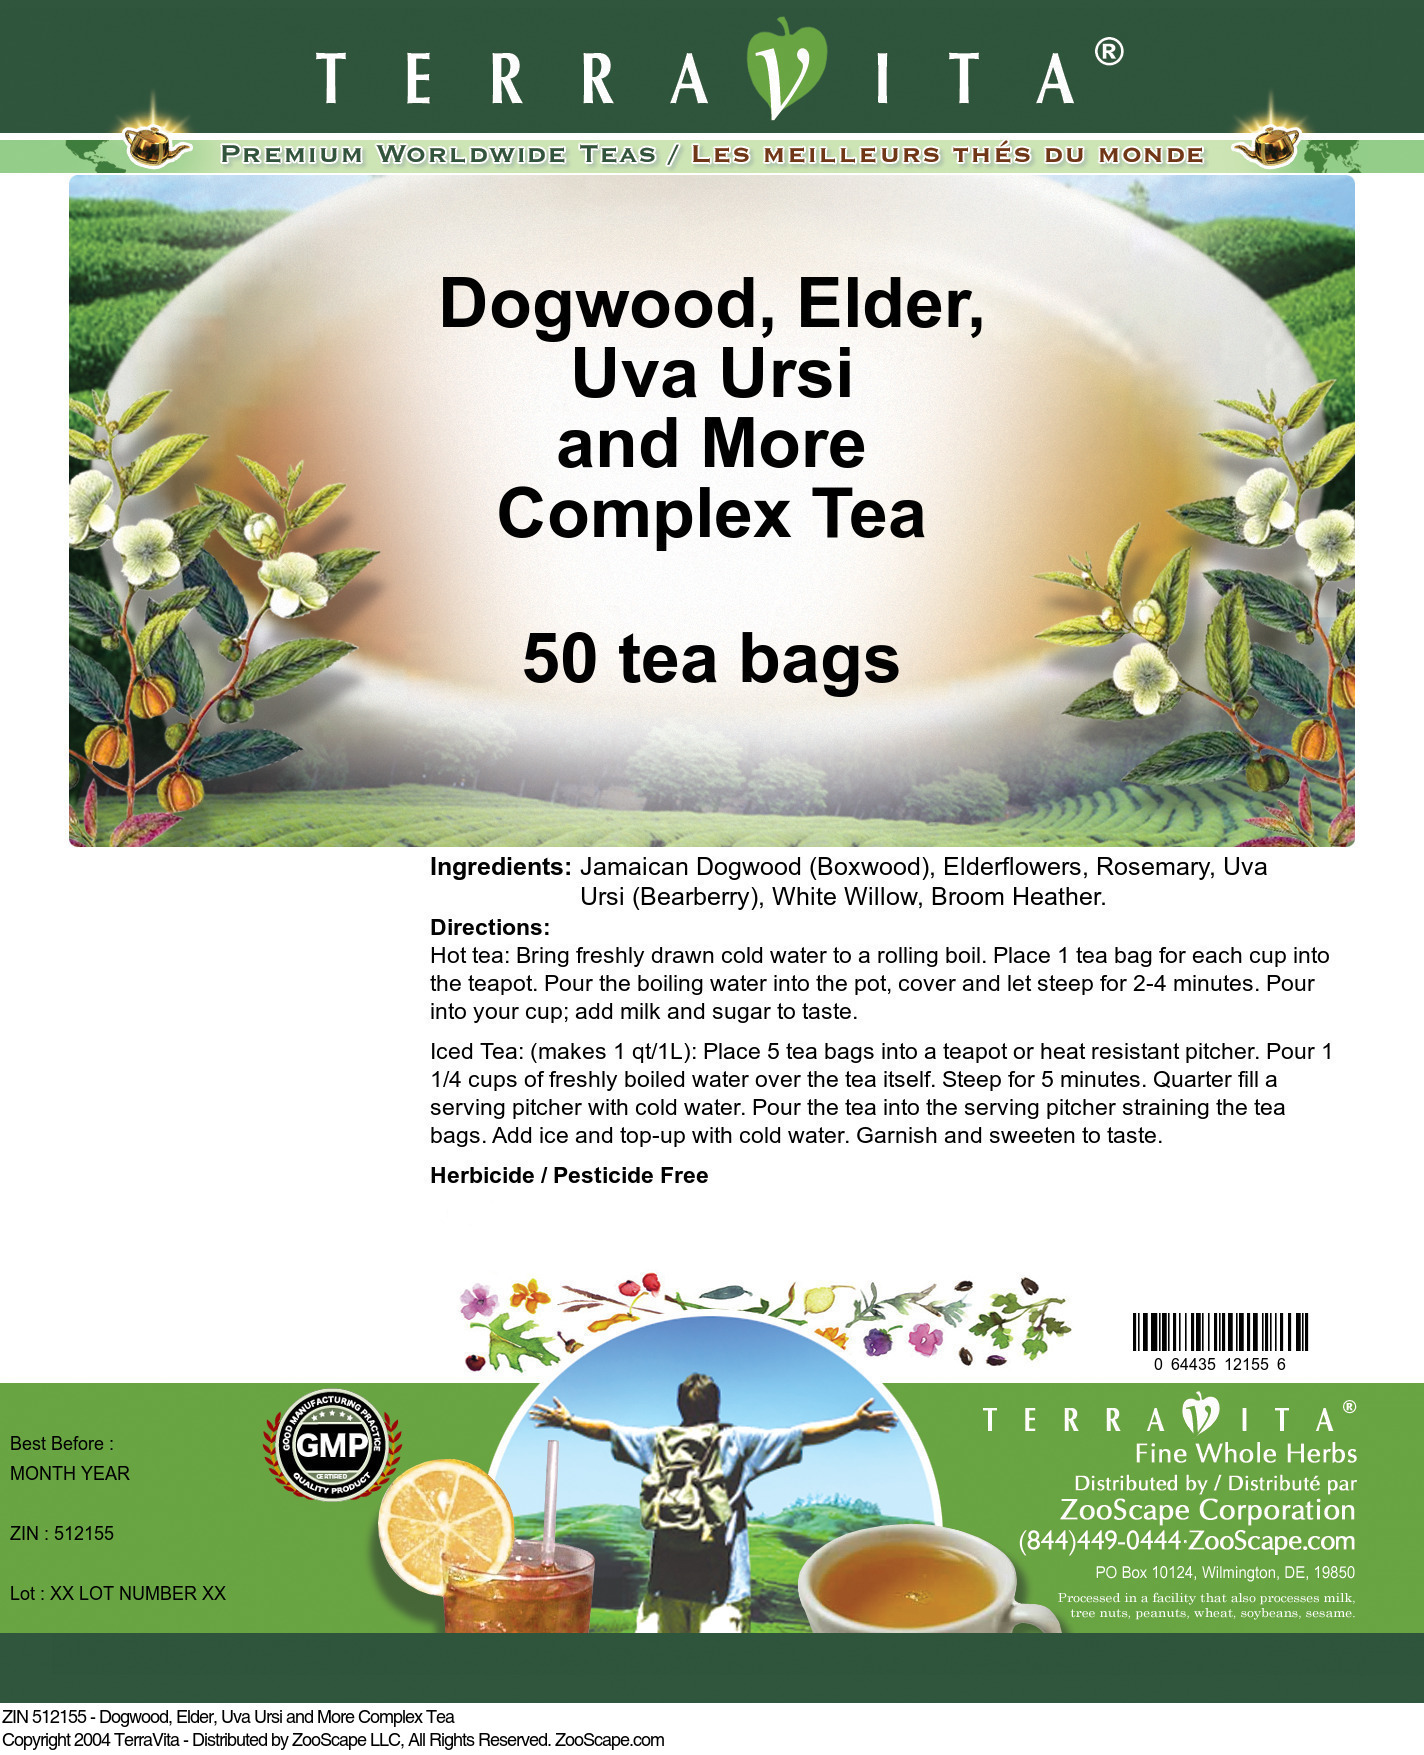 Dogwood, Elder, Uva Ursi and More Complex Tea - Label